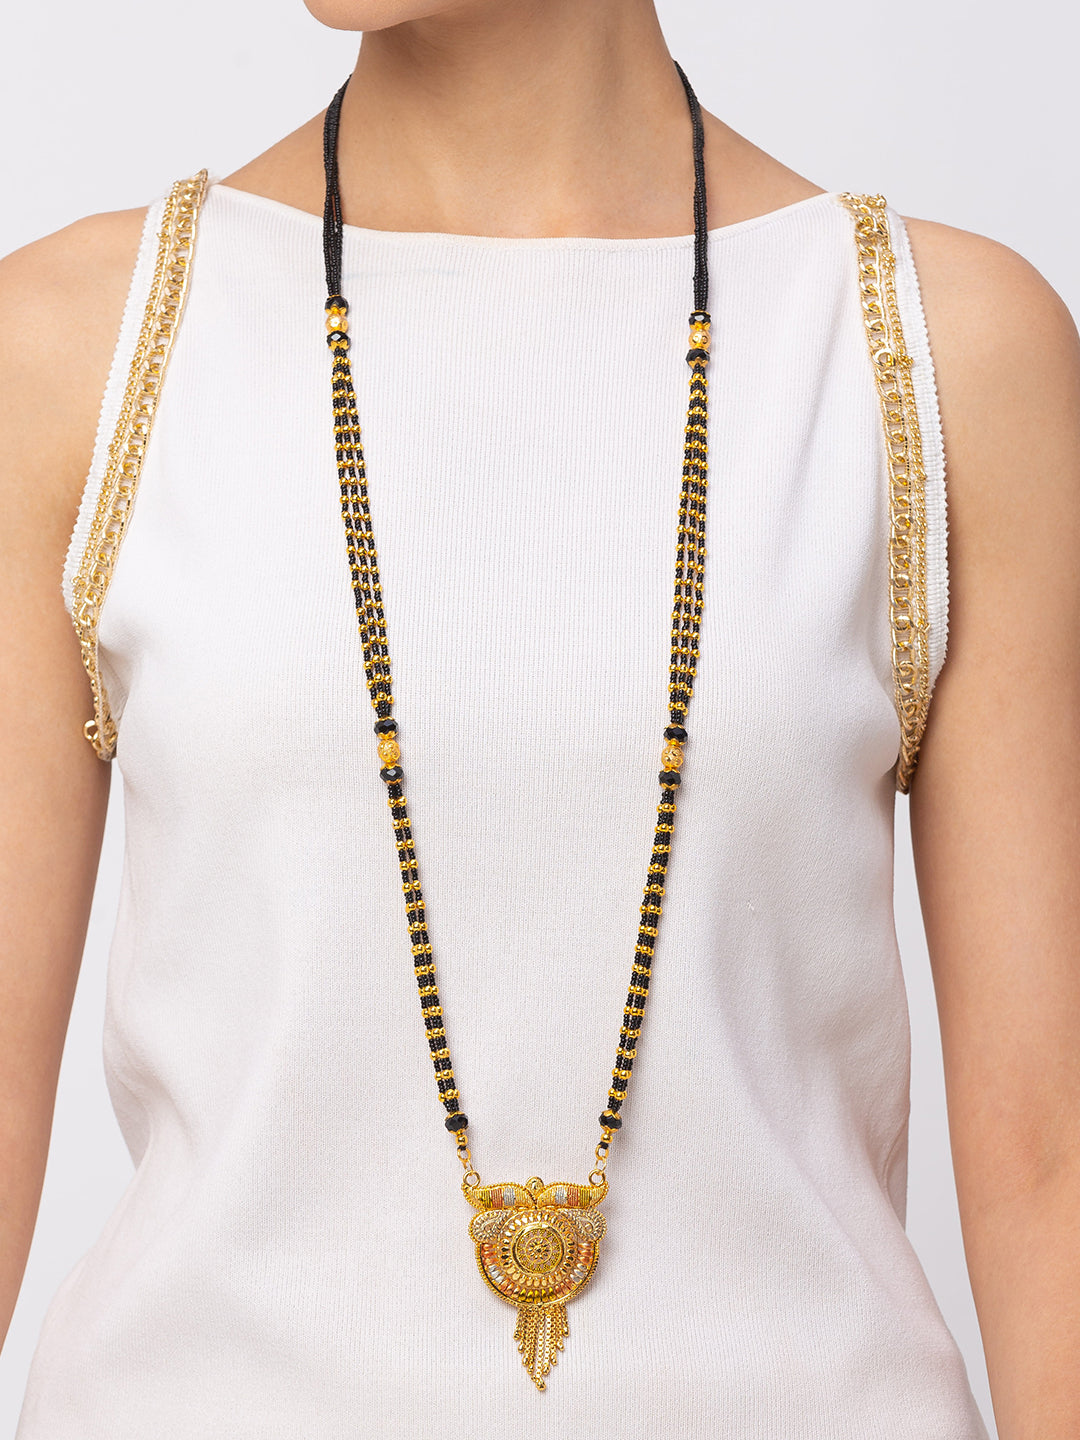 image for Digital Dress Room One Gram Gold Plated Long Mangalsutra मंगलसूत्र Latest Design Tanmaniya/Long Gold Chain/Black Gold Beads New Mangalsutra Designs For Women (43 Inch)